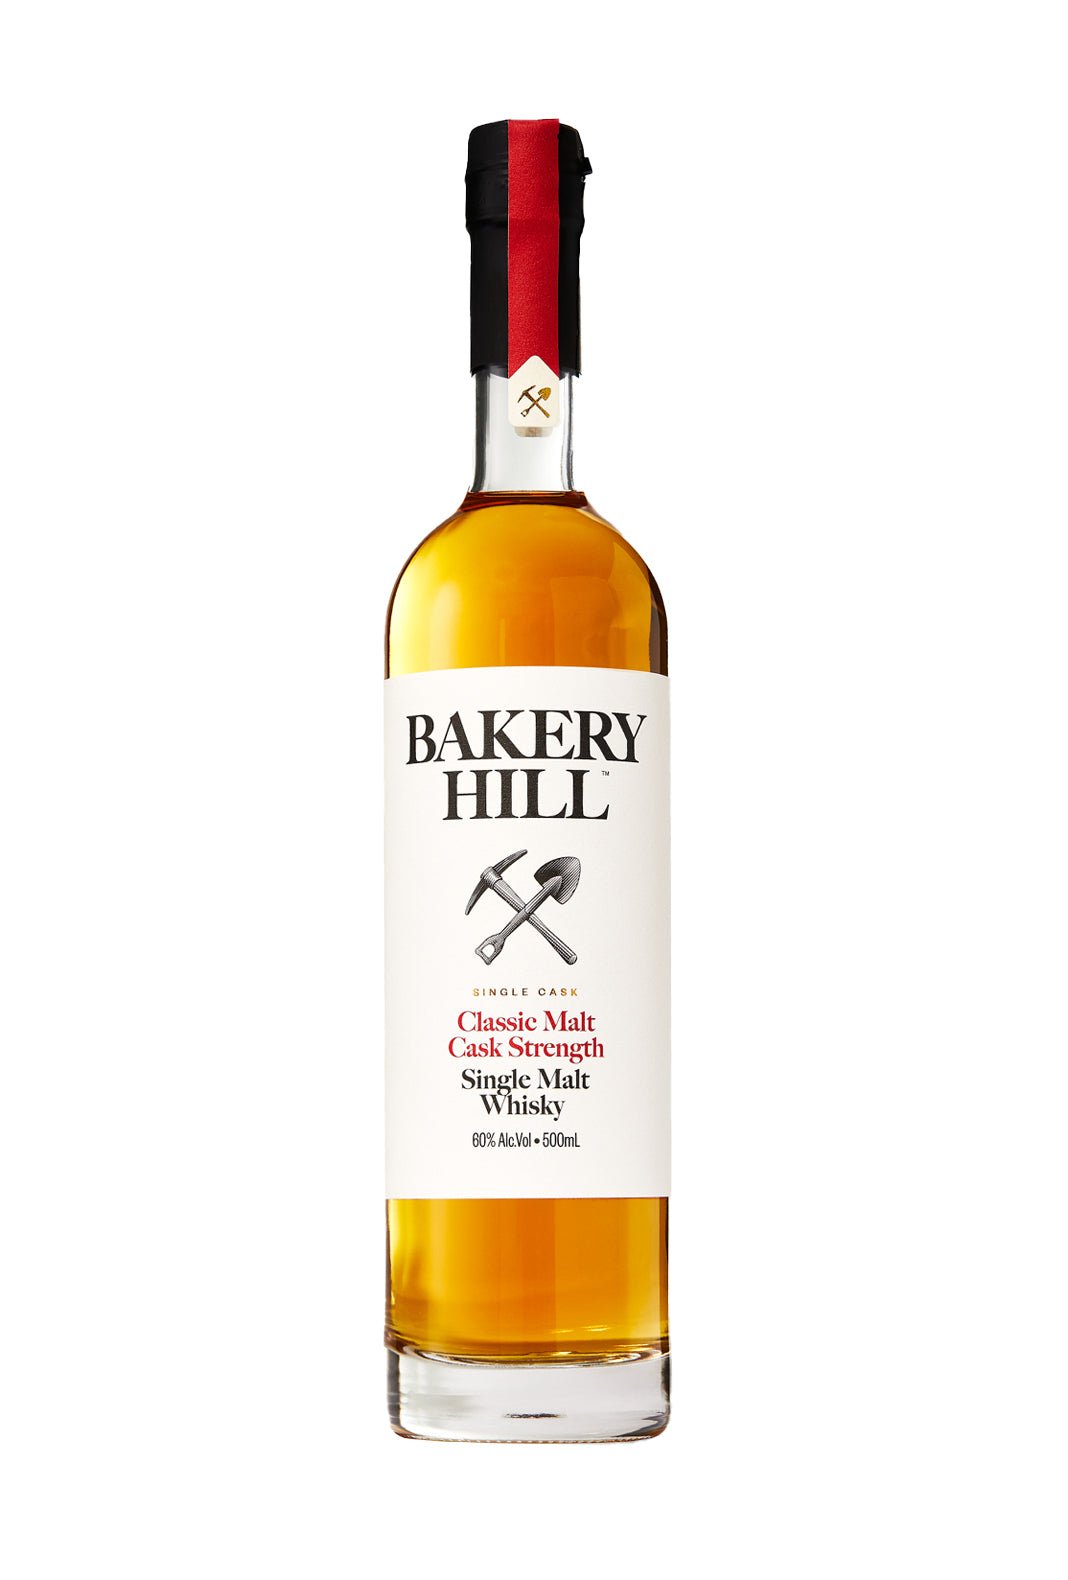 Bakery Hill Classic Malt Cask Strength 60% 500ml | Whisky | Shop online at Spirits of France